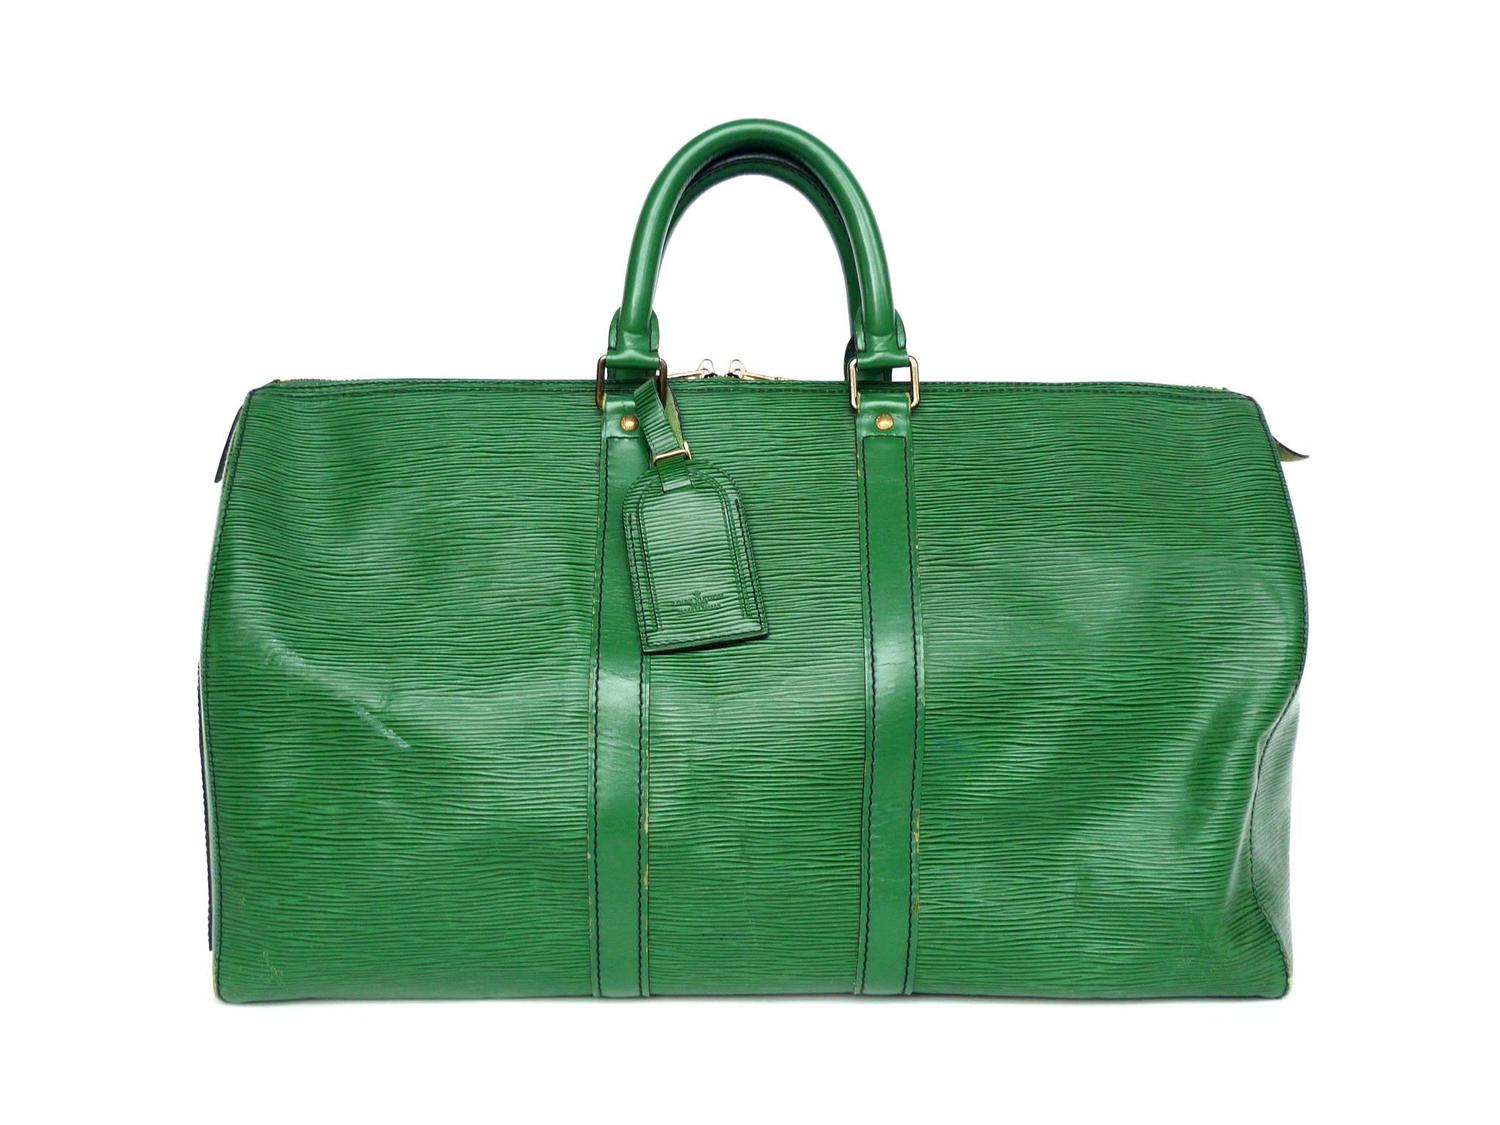 Louis Vuitton Green Epi Leather Keepall 45 Travel Bag at 1stdibs